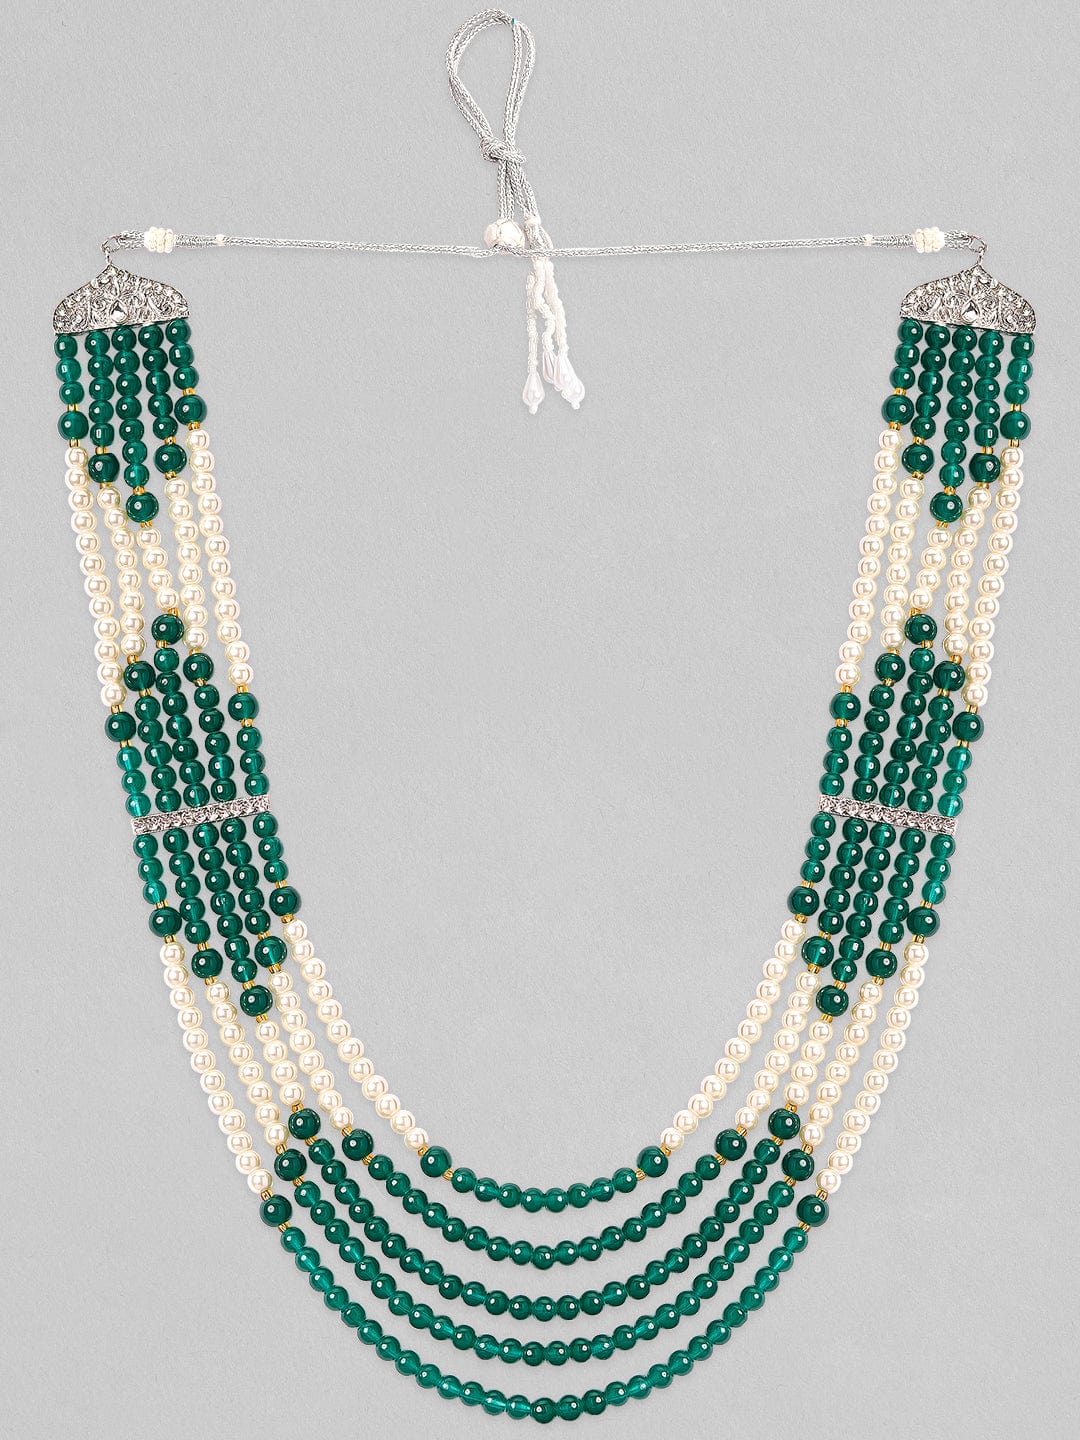 6mm Bead Necklace - Jennifer Hanscom Jewelry